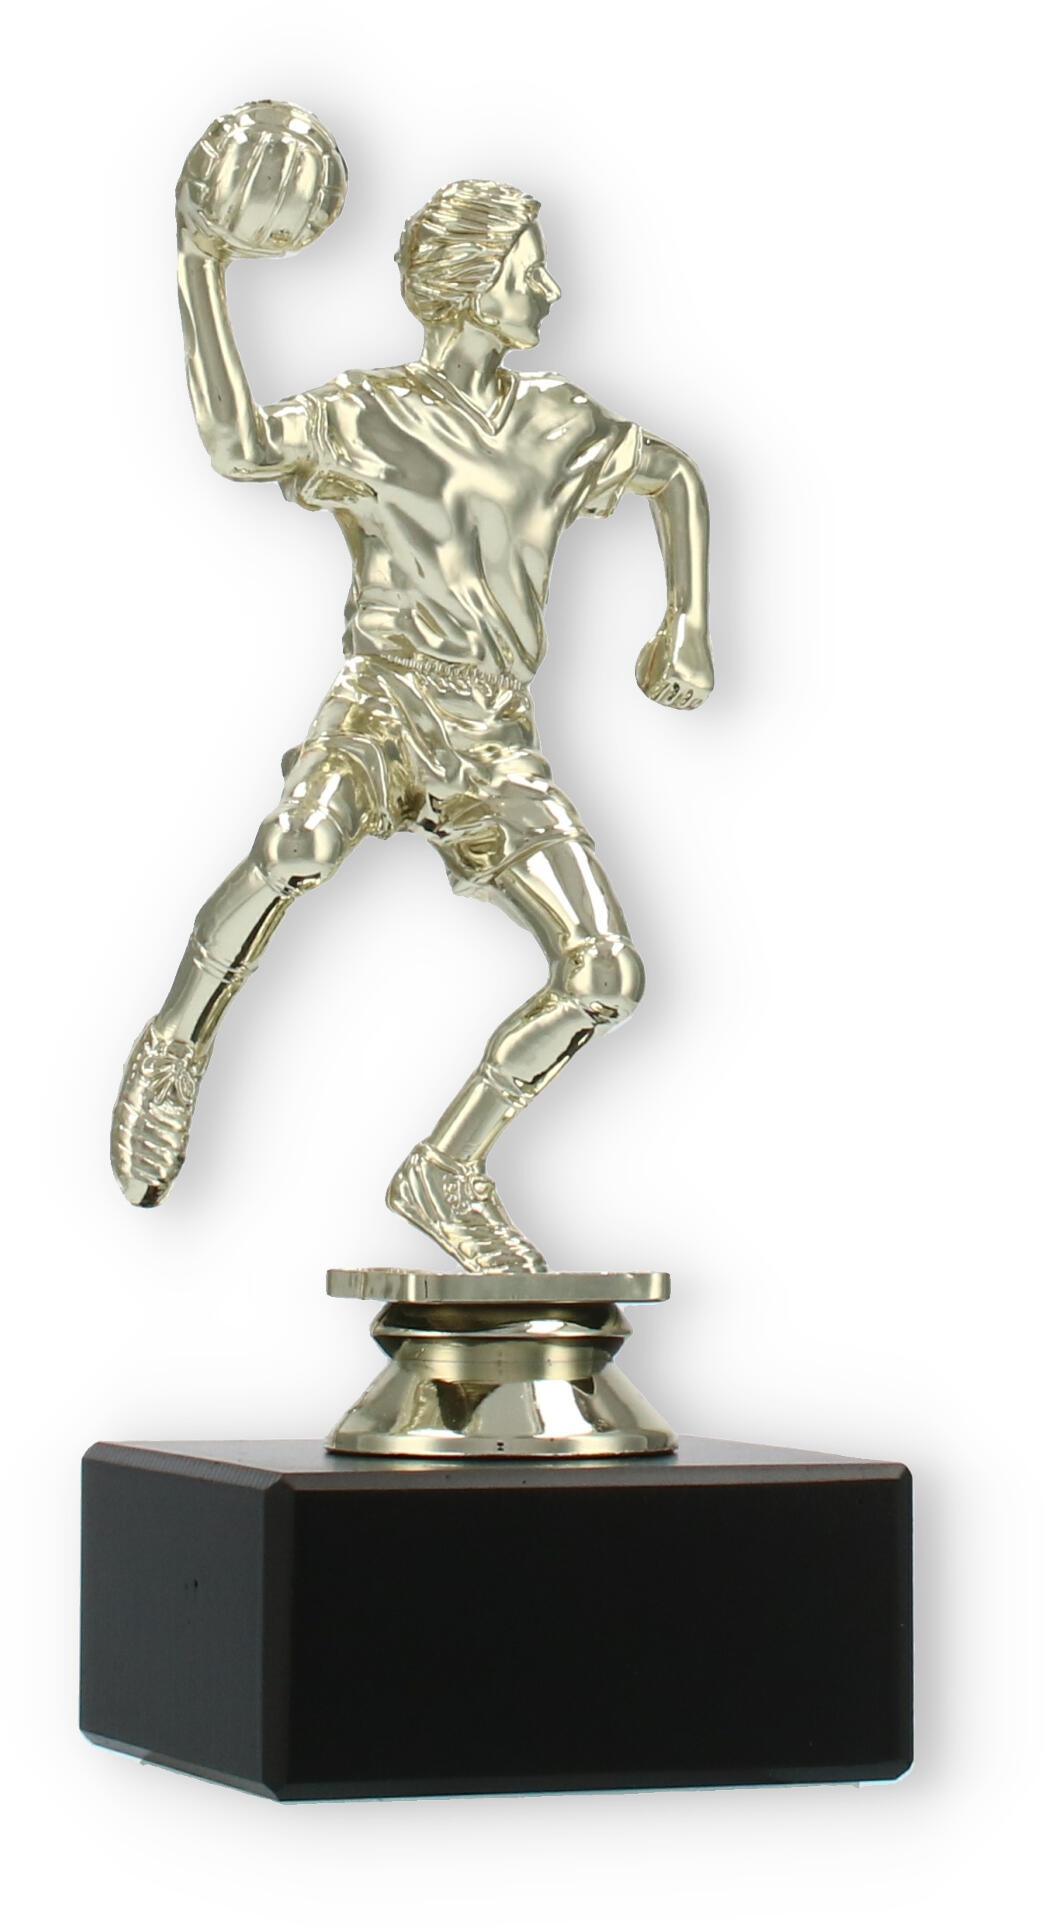 Pokal Kunststofffigur Handballspieler gold auf schwarzem Marmorsockel 15,8cm